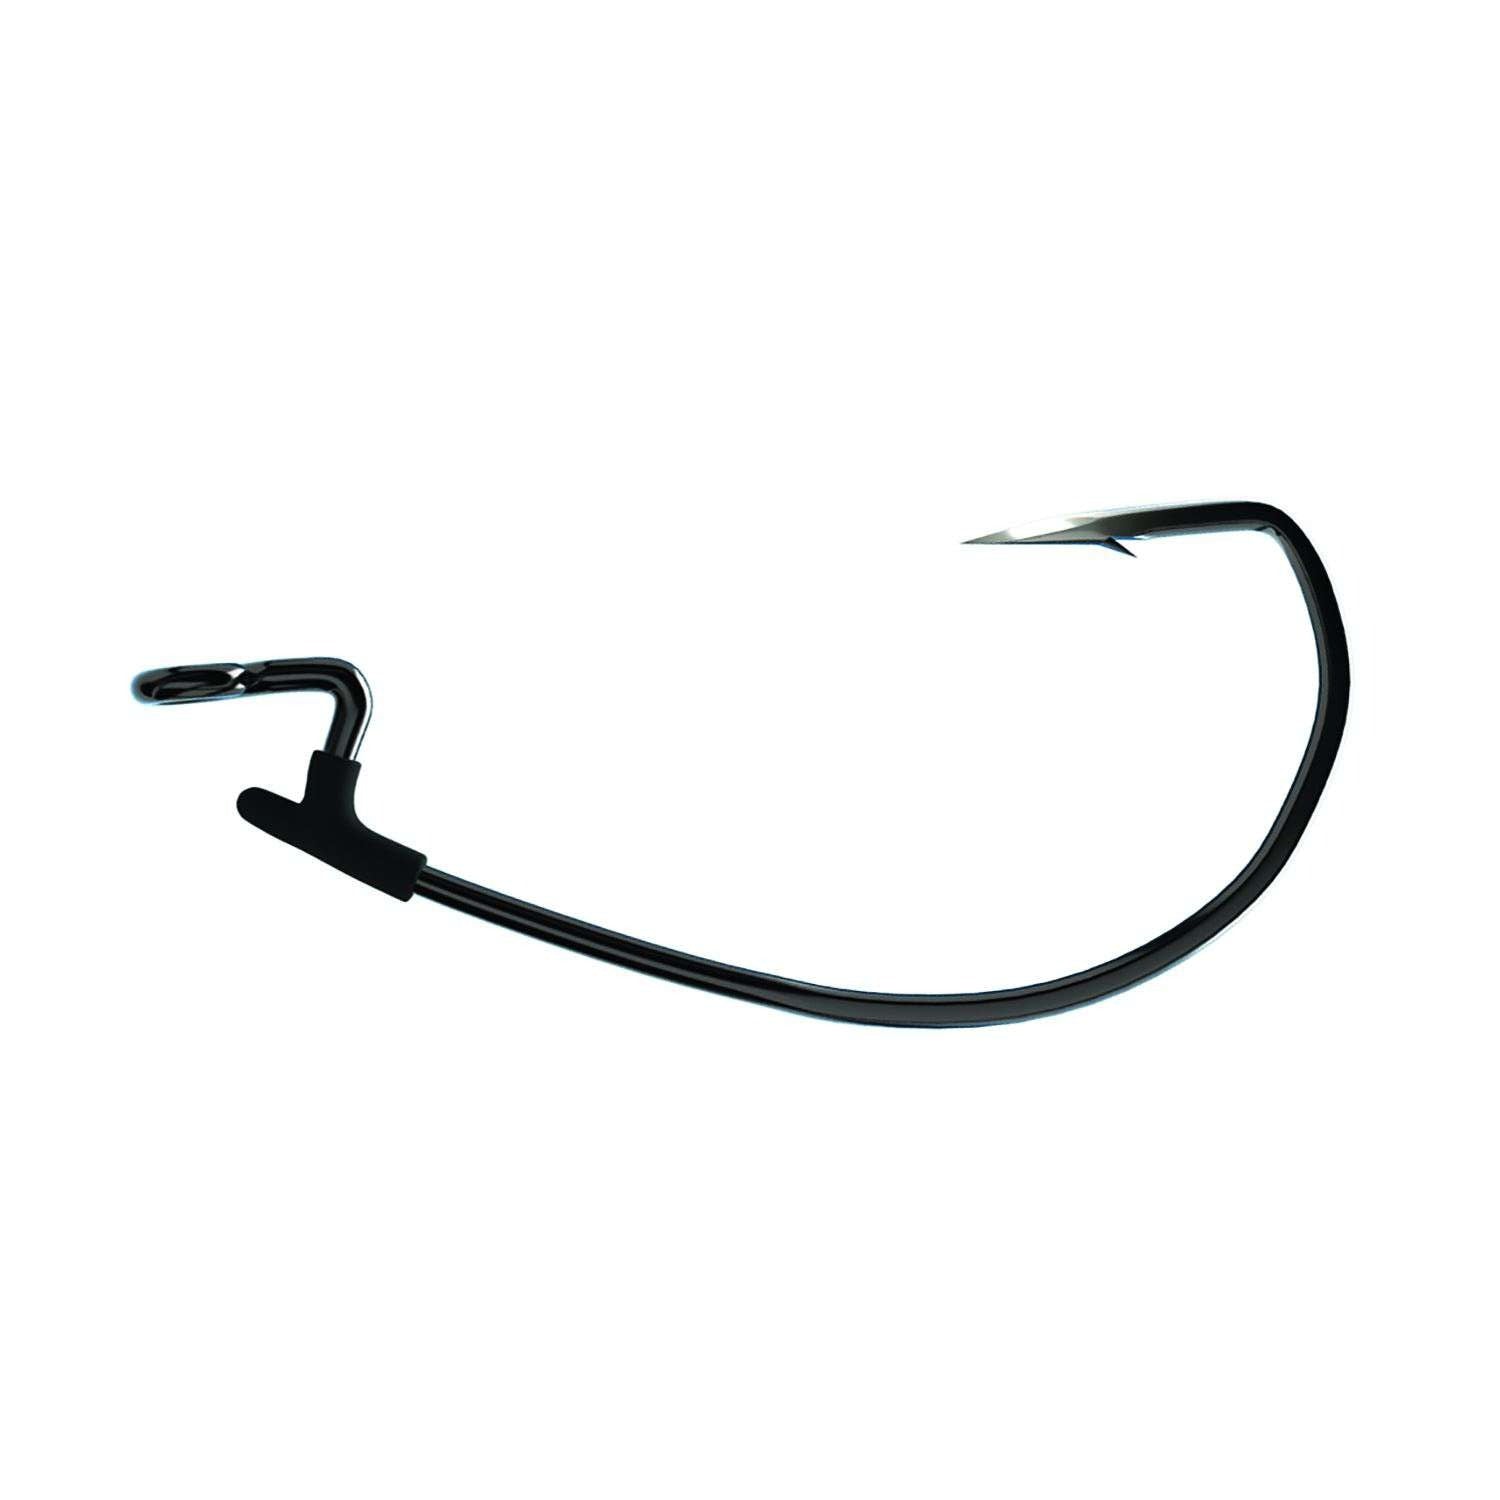 Generic Hook Protection 1030pcs Snap-on Treble Hook Caps Anti